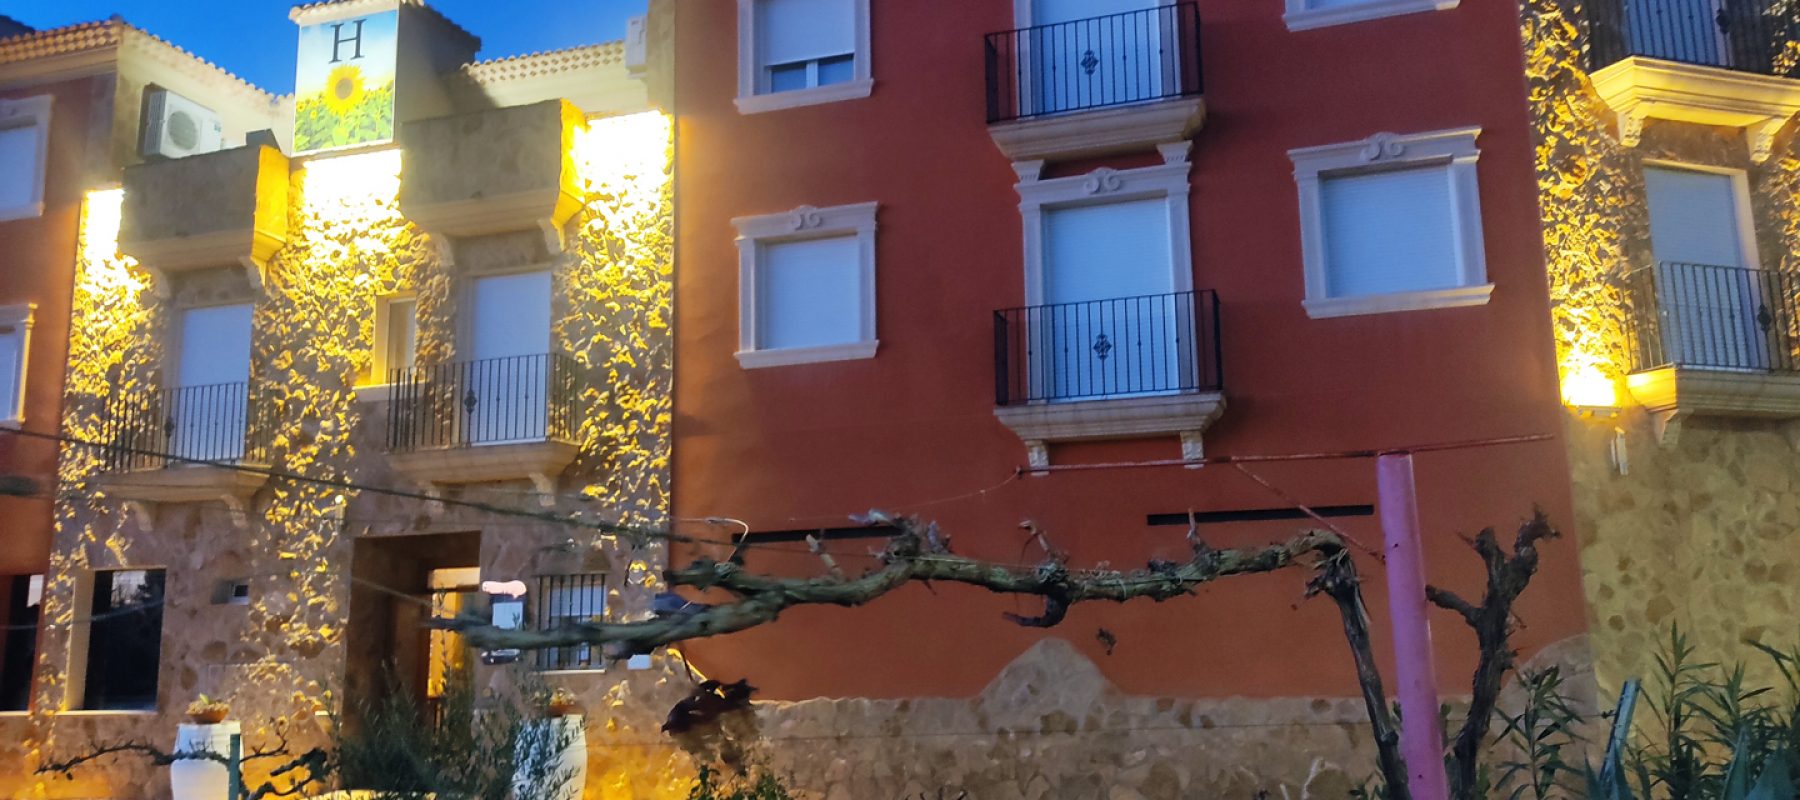 Hostal Los Girasoles en Iniesta, Cuenca